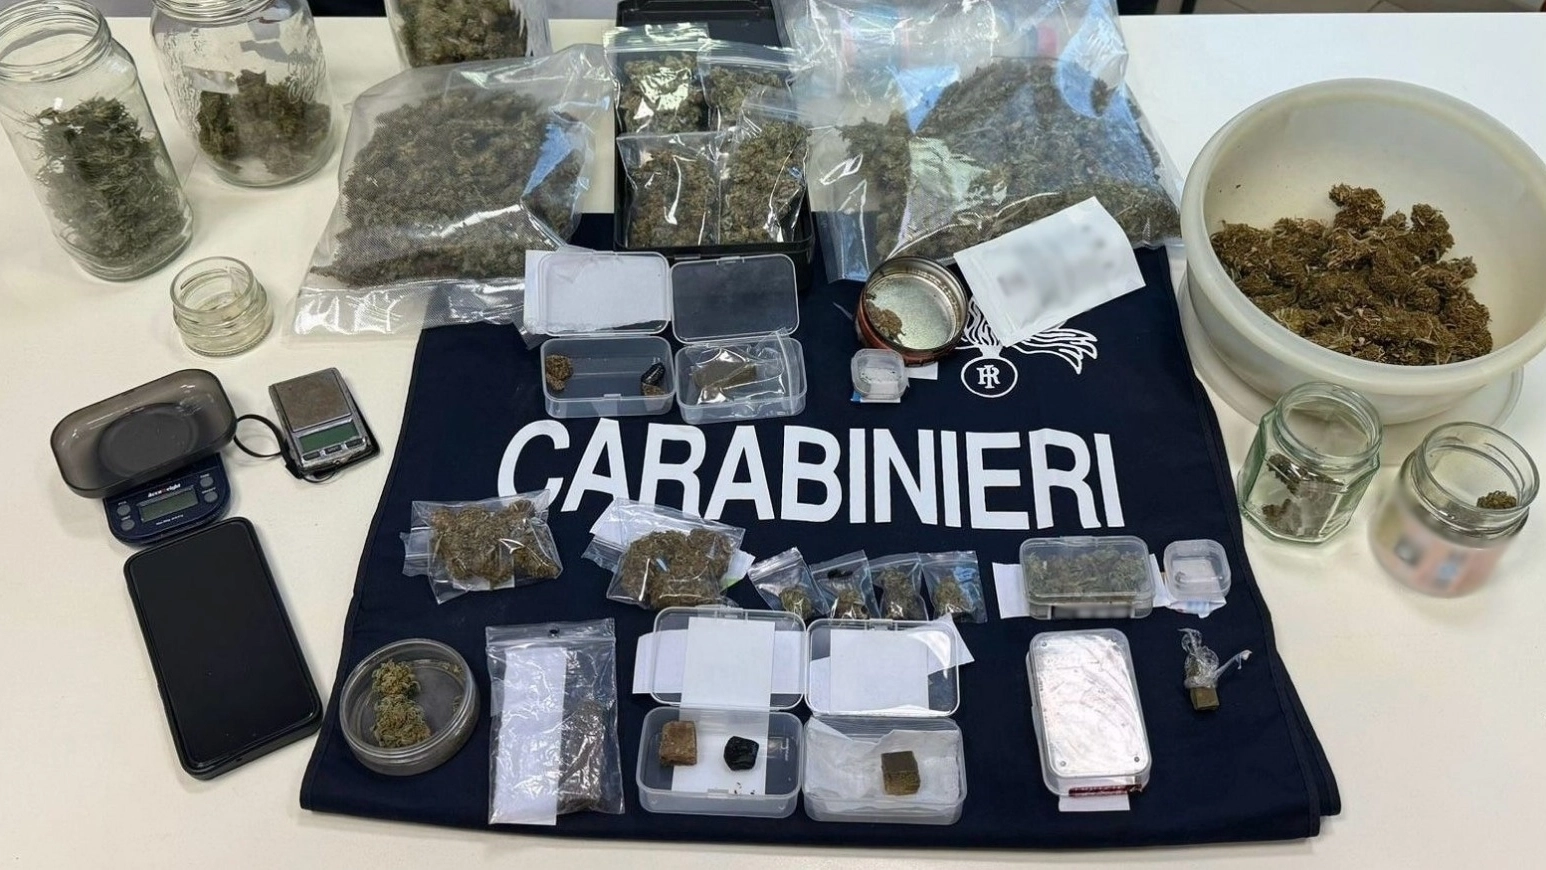 La droga recuperata dai carabinieri